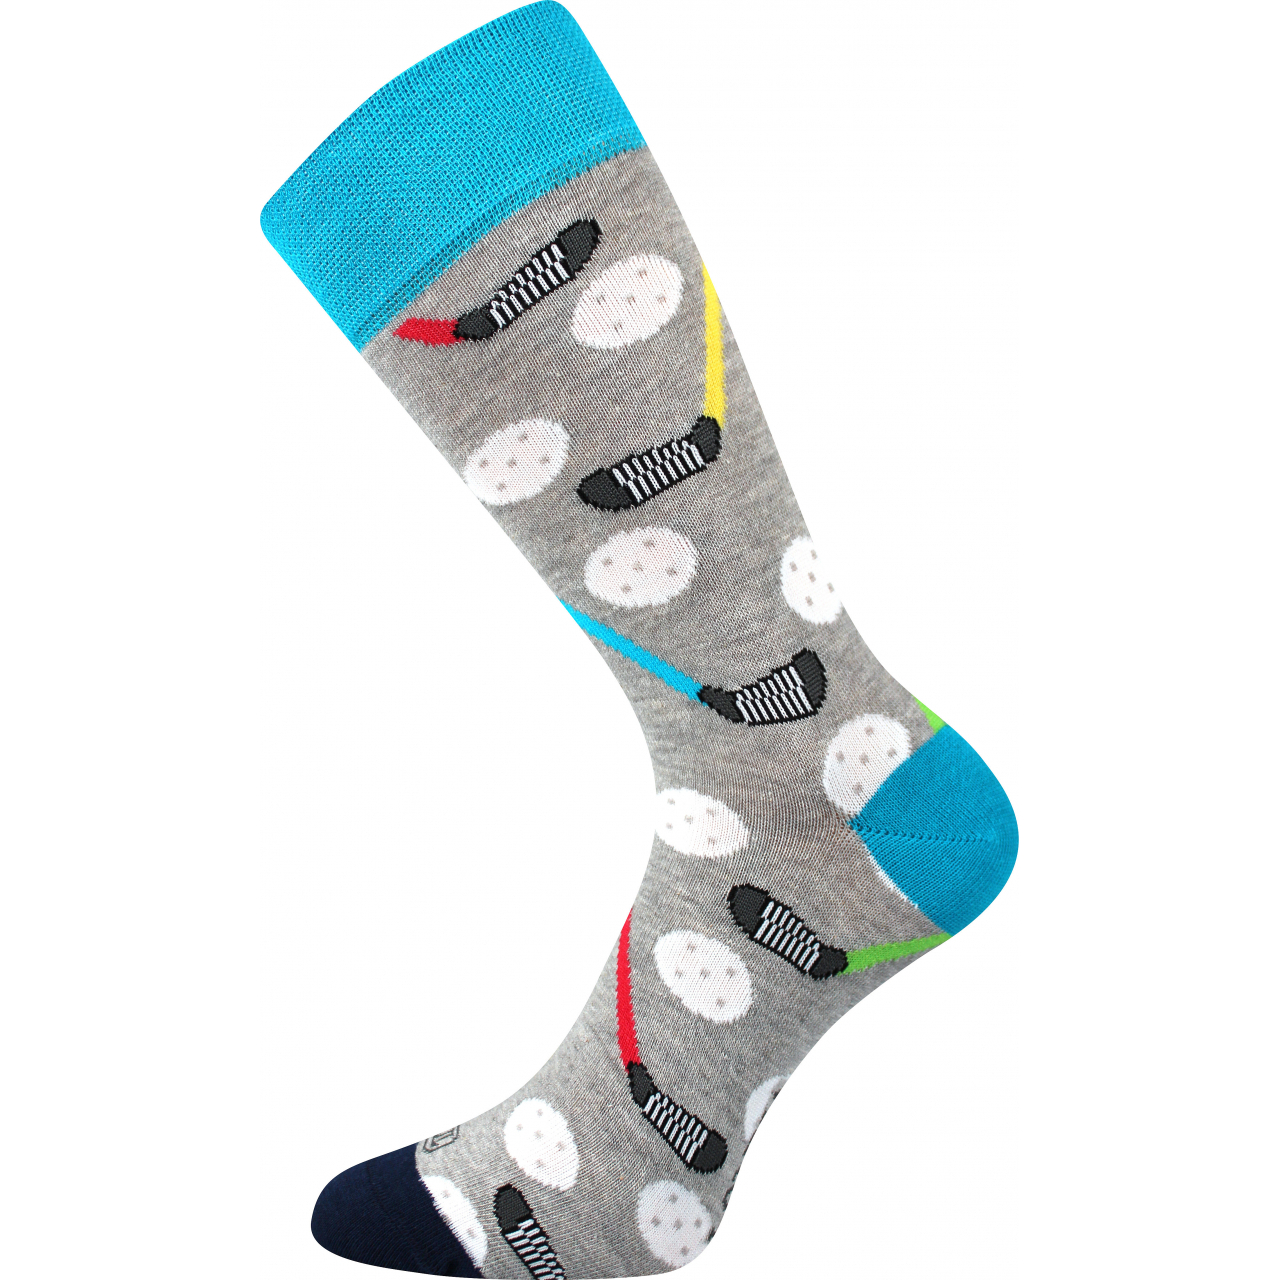 Ponožky unisex trendy Lonka Woodoo Florbal - šedé-modré, 43-46